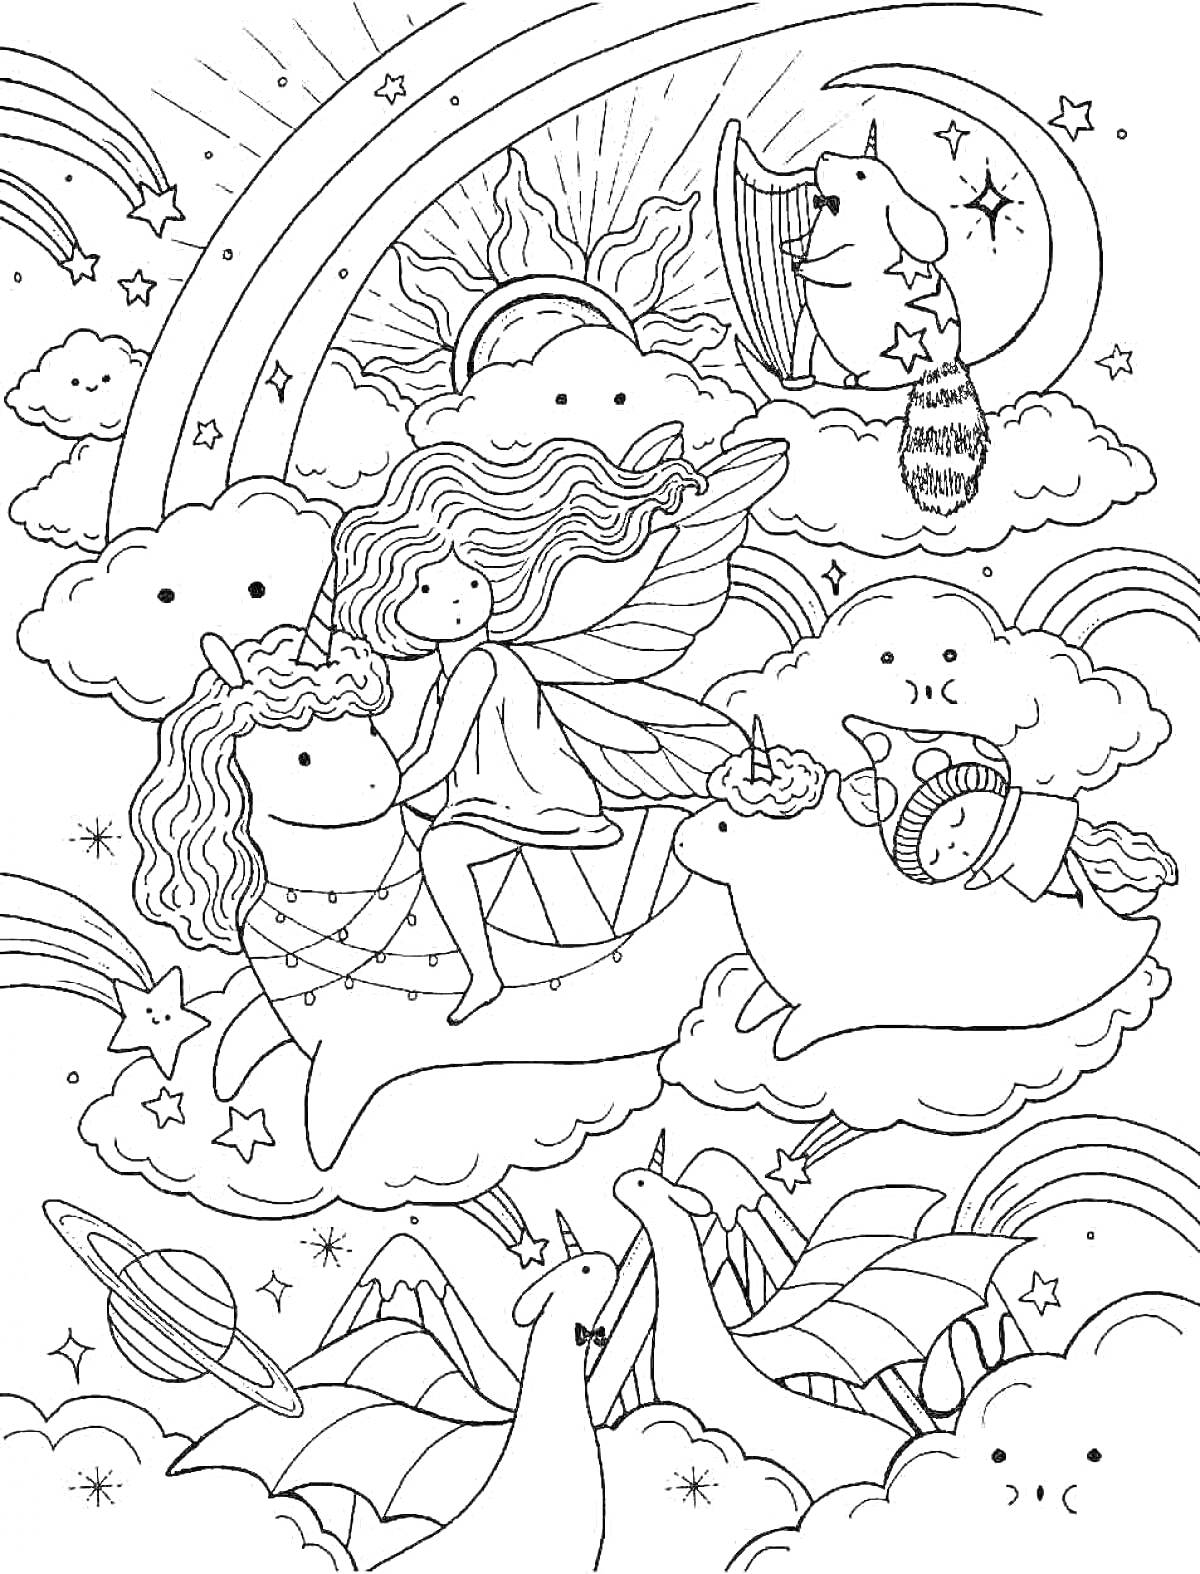 На раскраске изображено: Девочка, Крылья, Единороги, Радуги, Облака, Звезды, Луна, Енот, Солнце, Колыбель, Фантазия, Волшебство